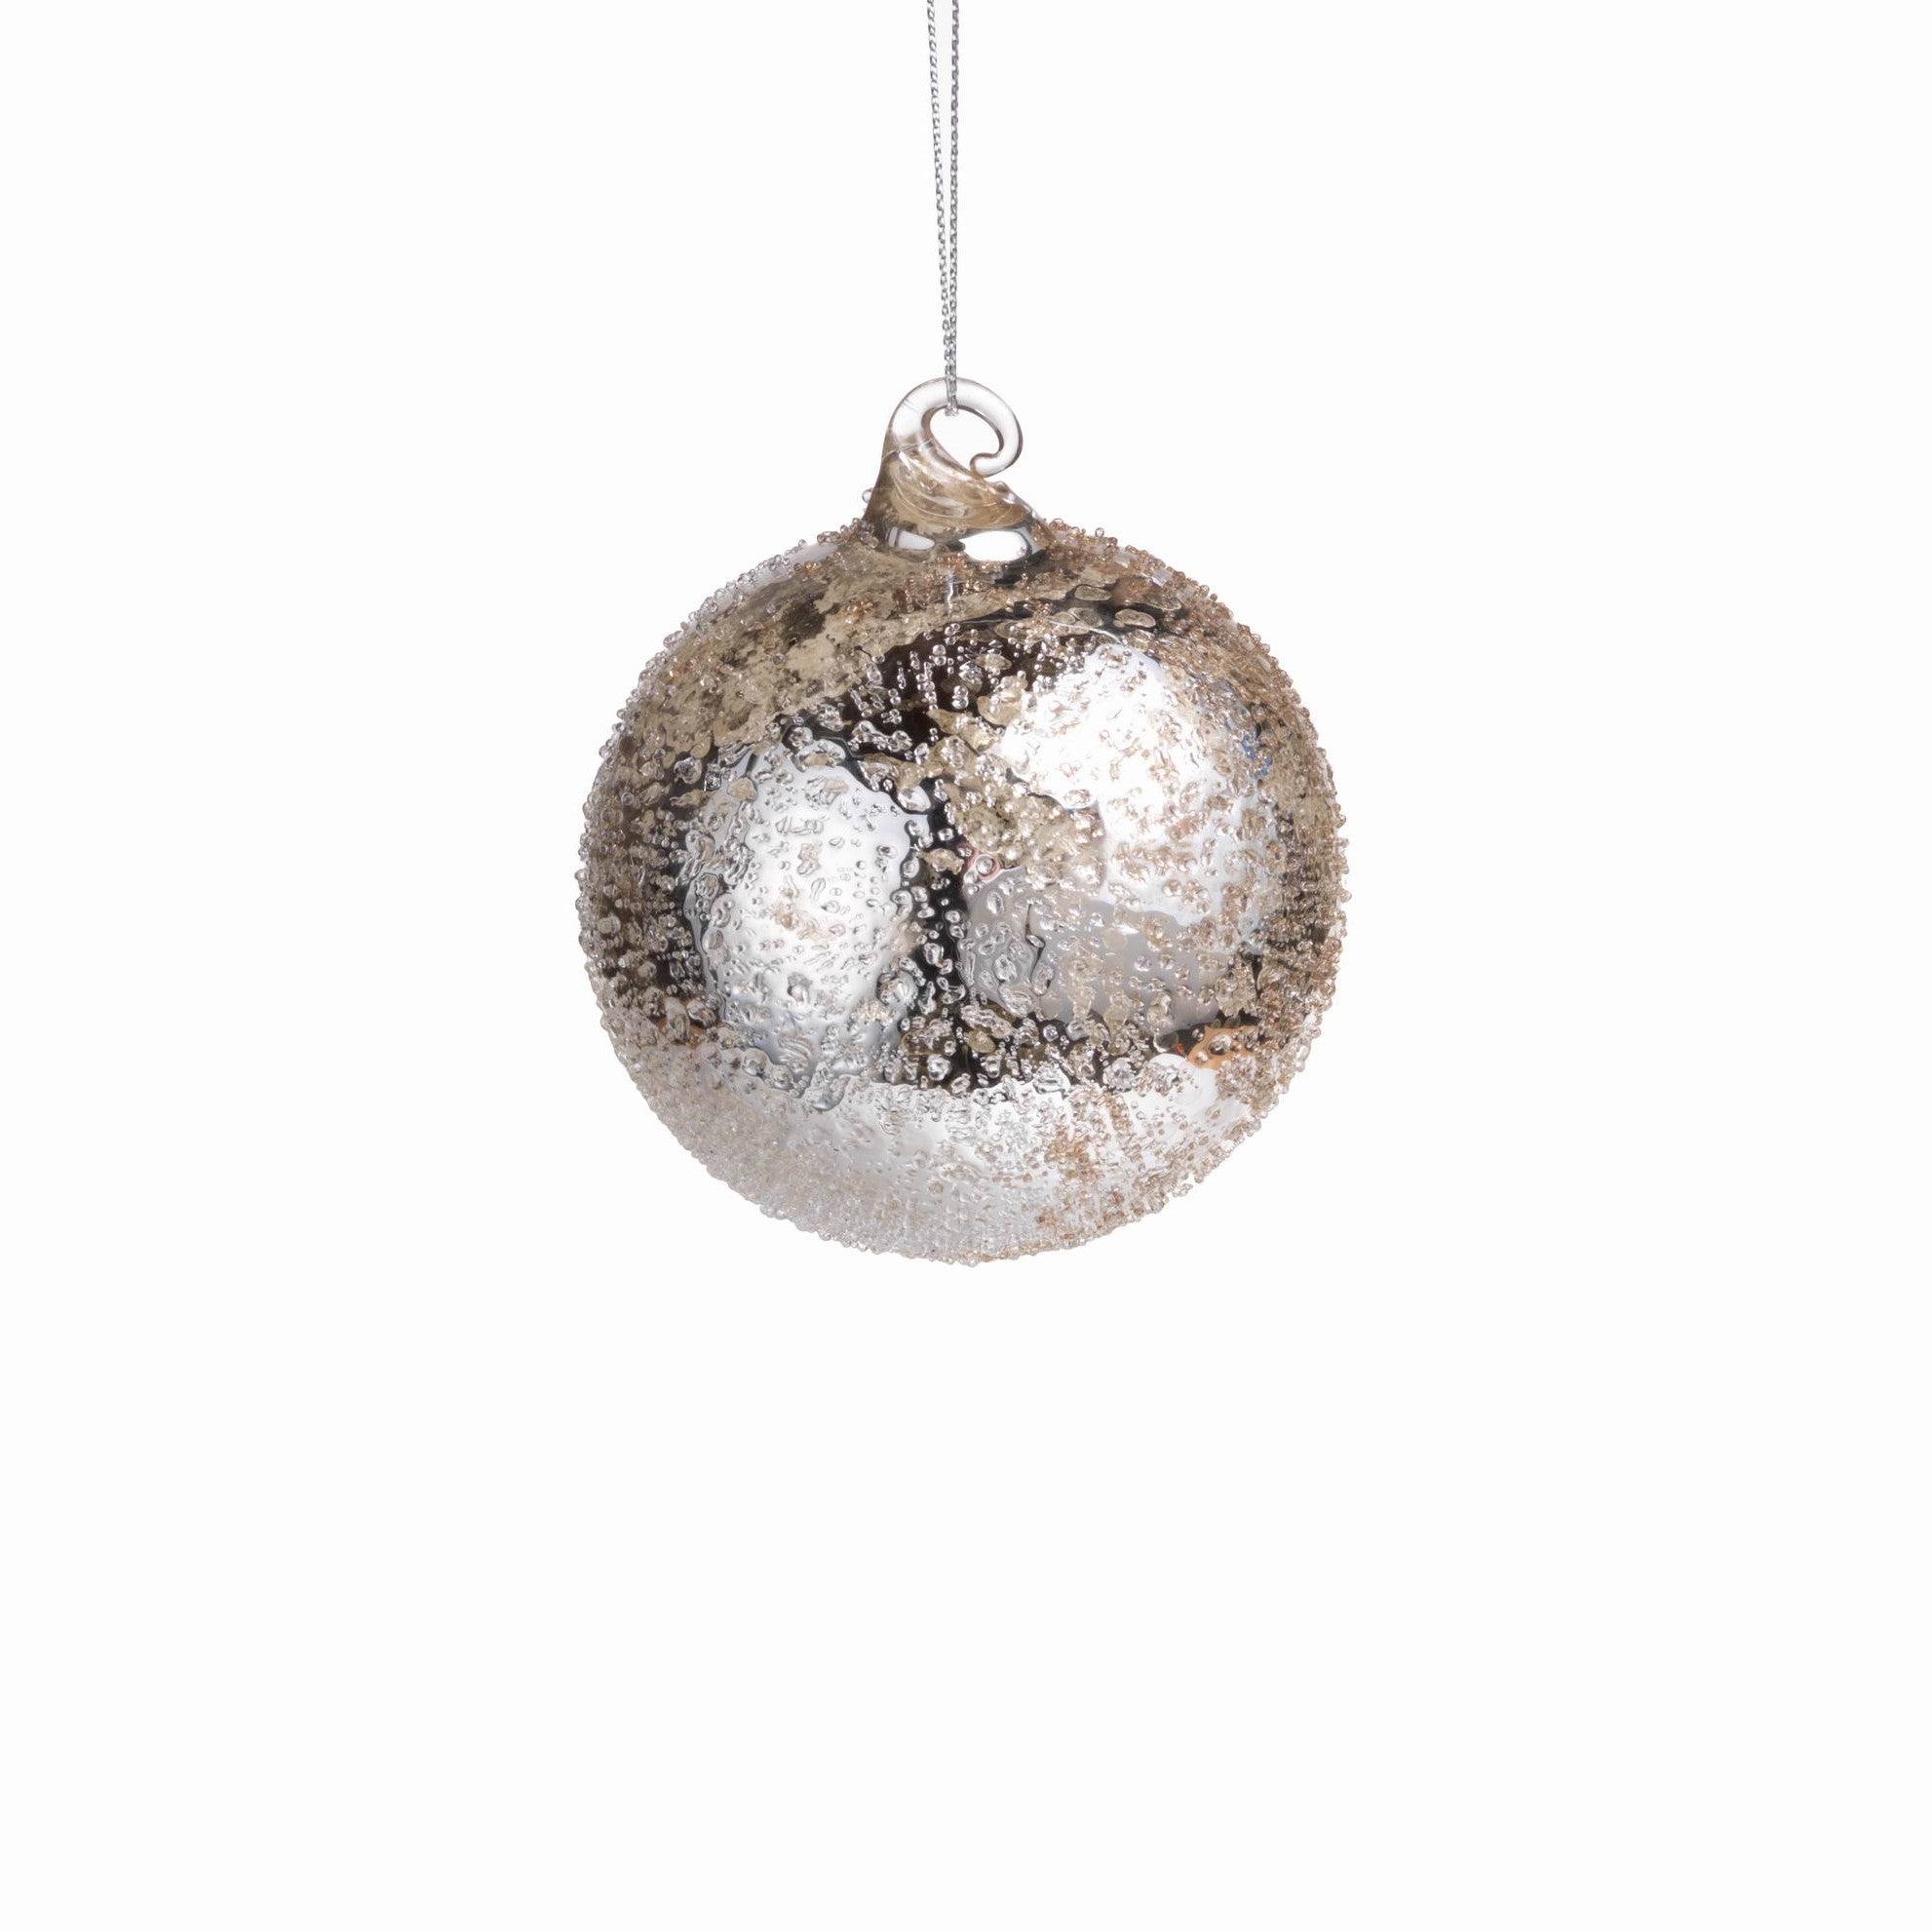 Antique Silver Round Ornaments - CARLYLE AVENUE